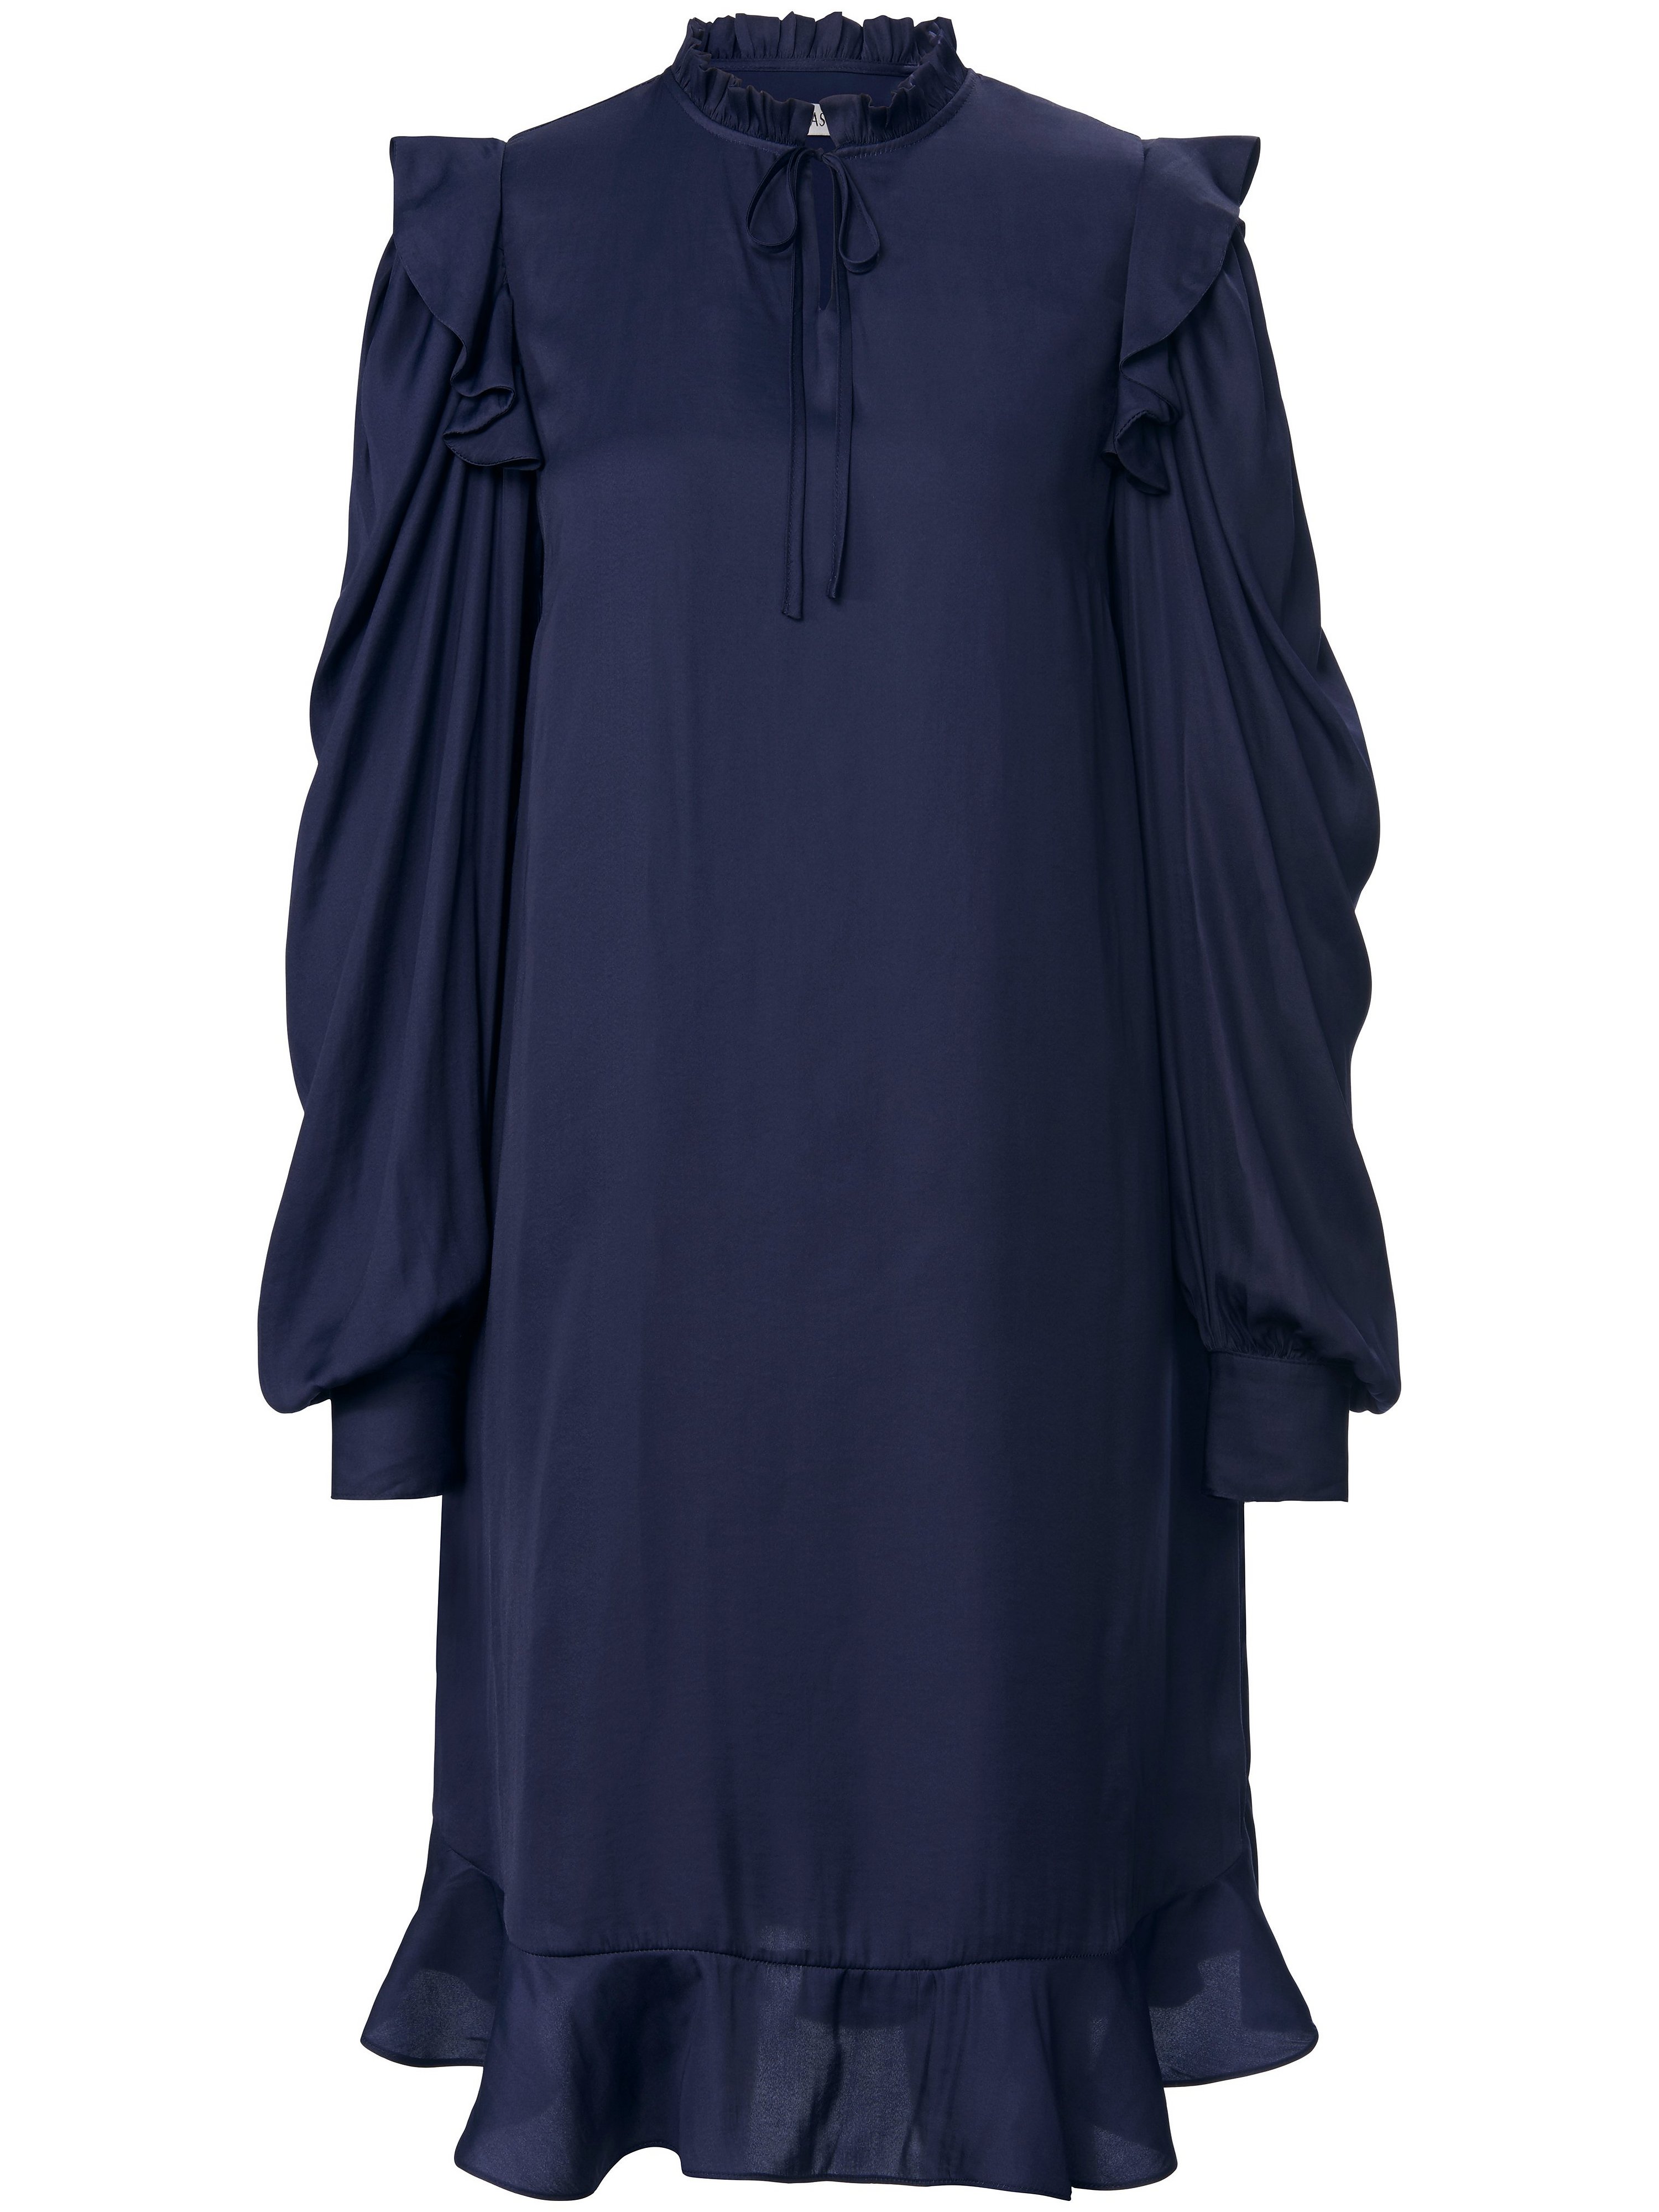 La robe manches longues  Uta Raasch bleu